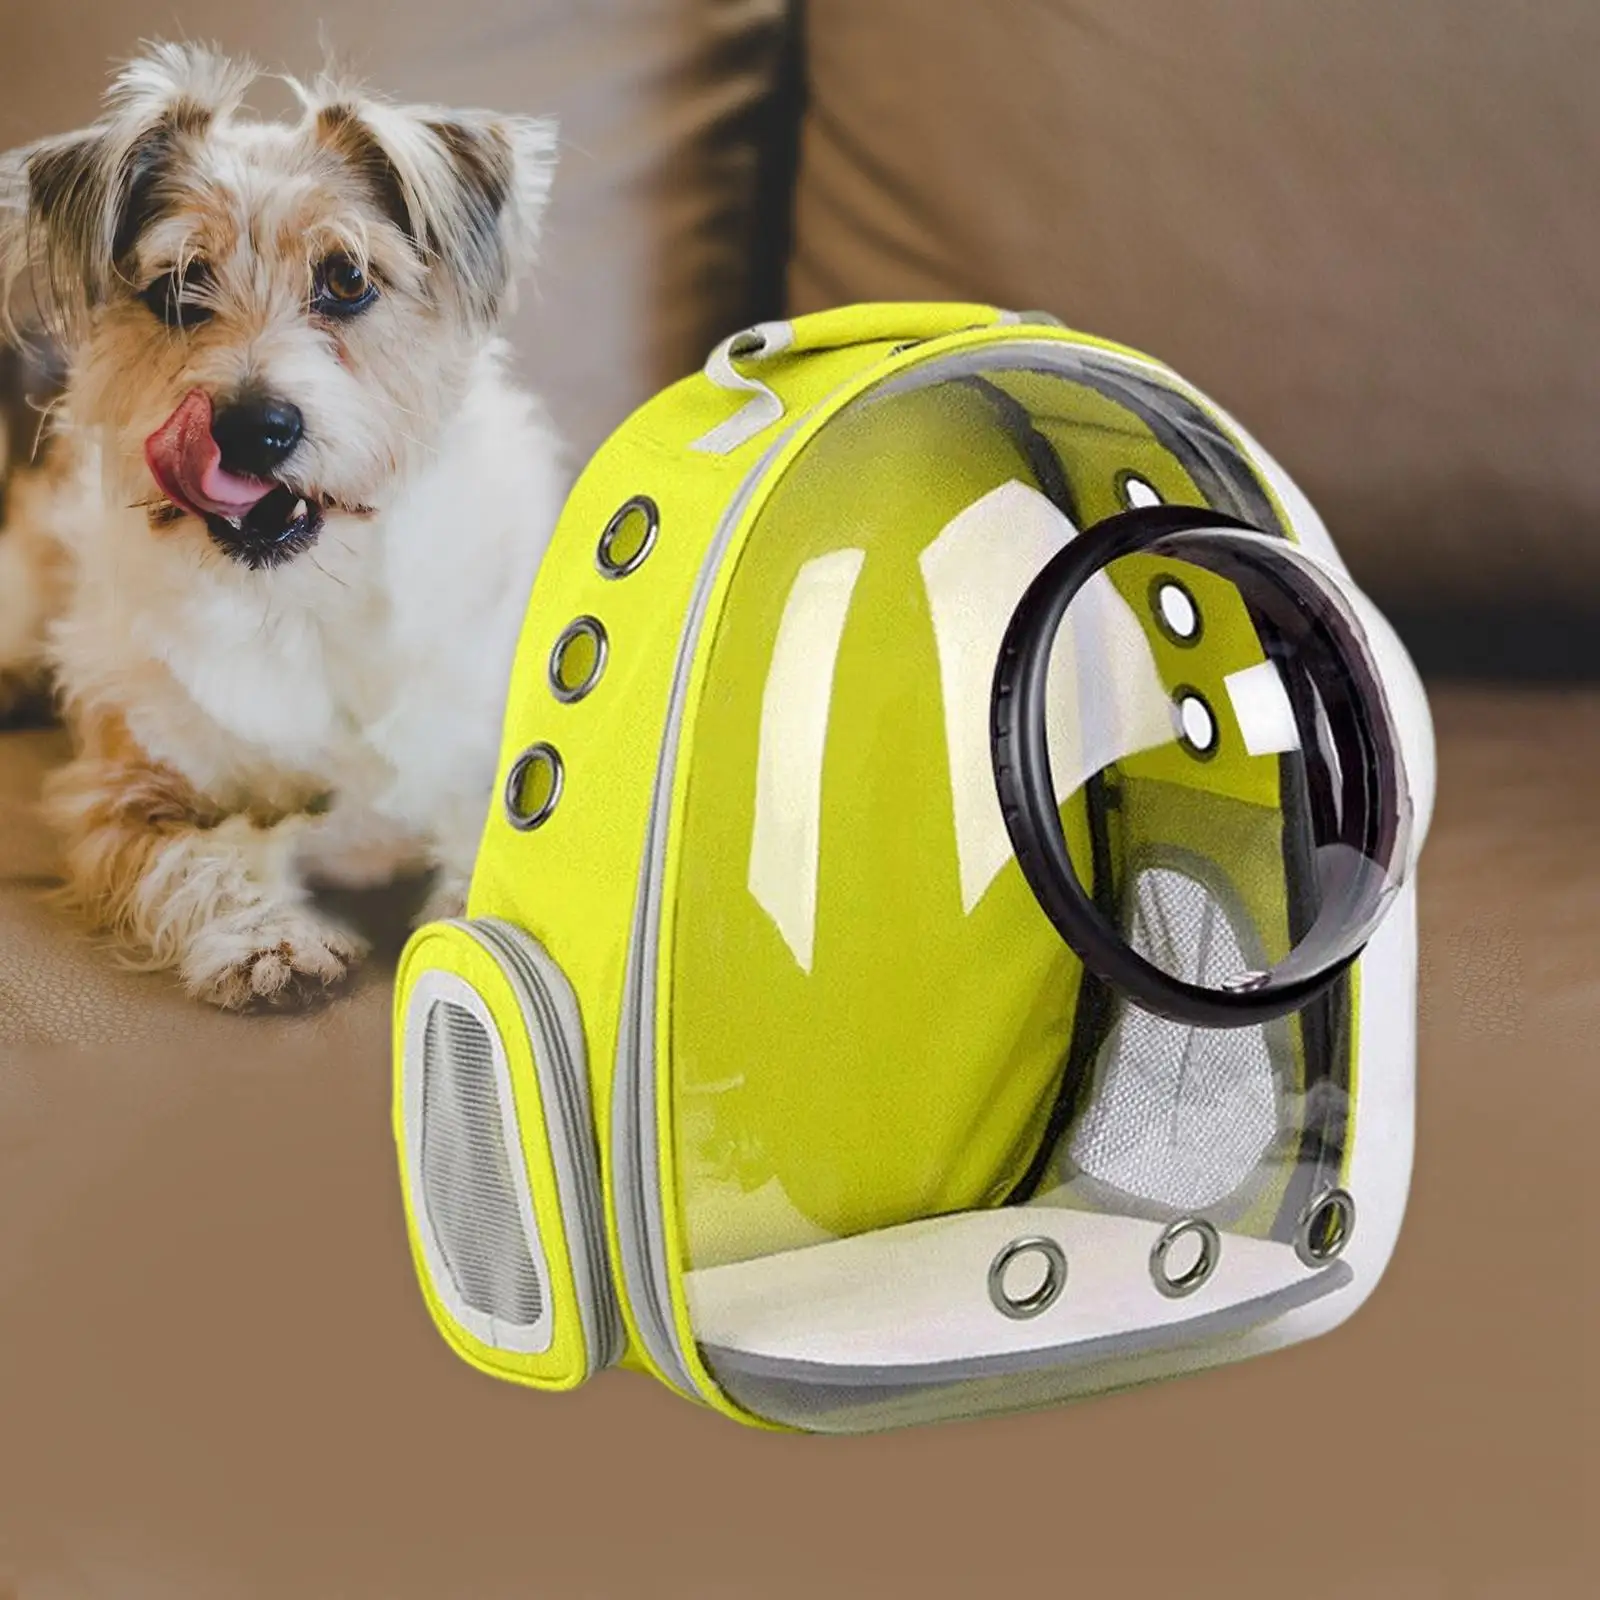 Pet Backpack Handbag Heat Proof Space Capsule Dog Cat Carrier Bag Carrying Travel Bag for Traveling Outdoor Use Hiking Walking